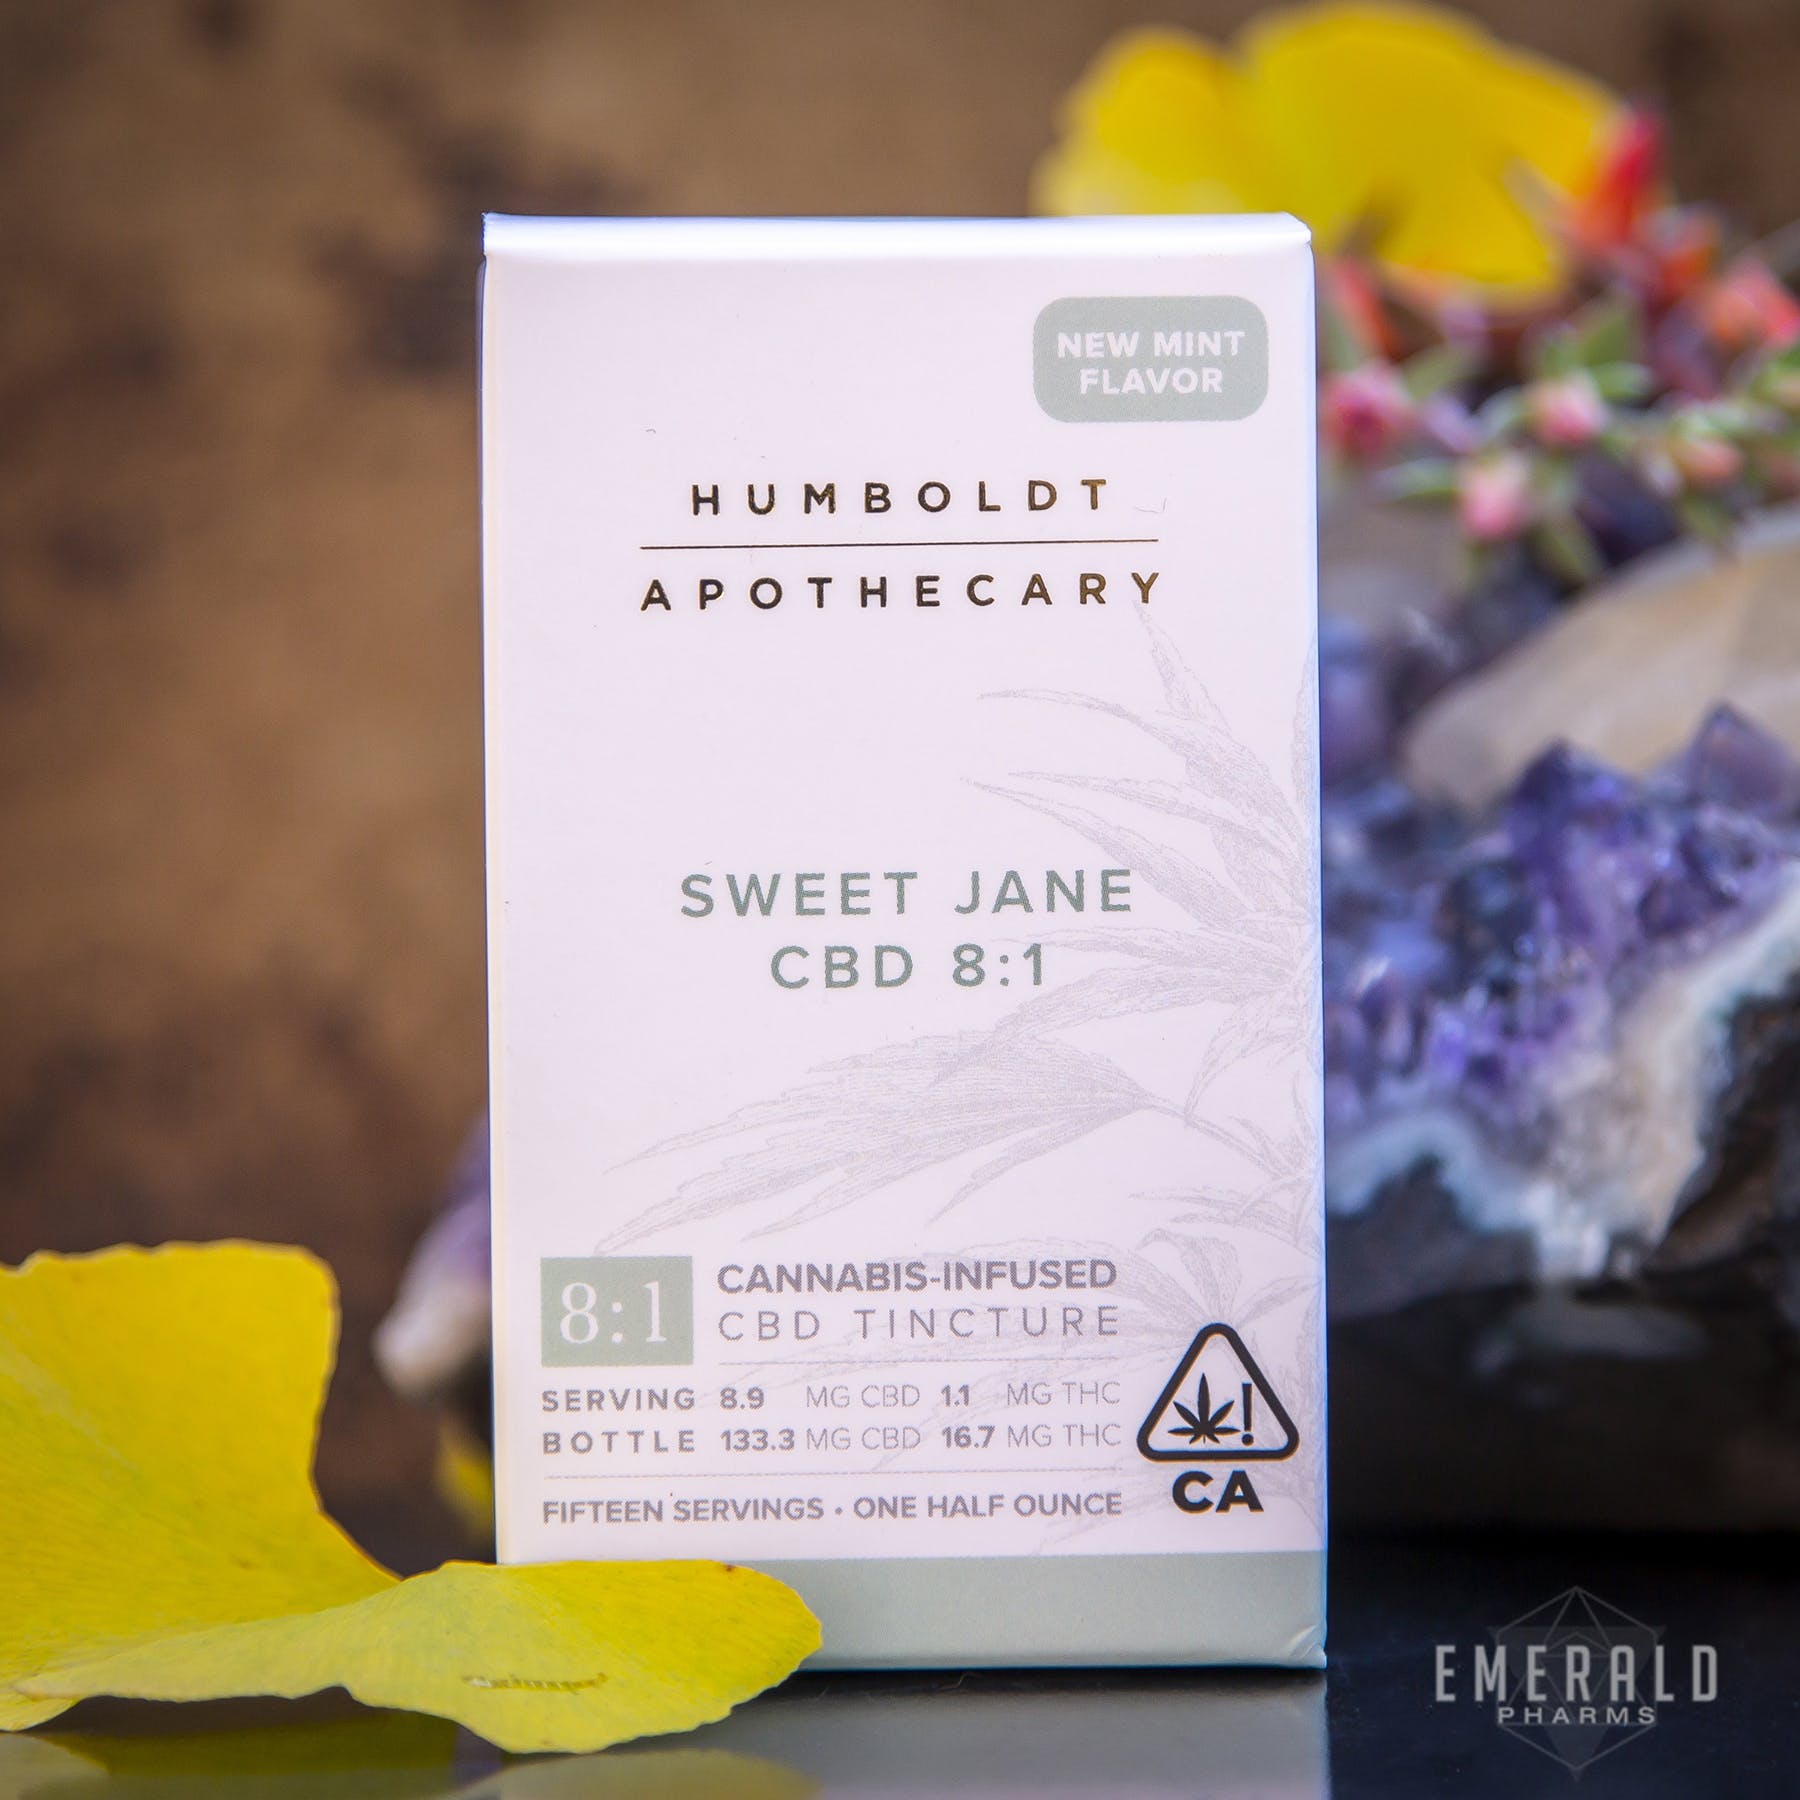 Sweet Jane CBD 8:1 by Humboldt Apothecary